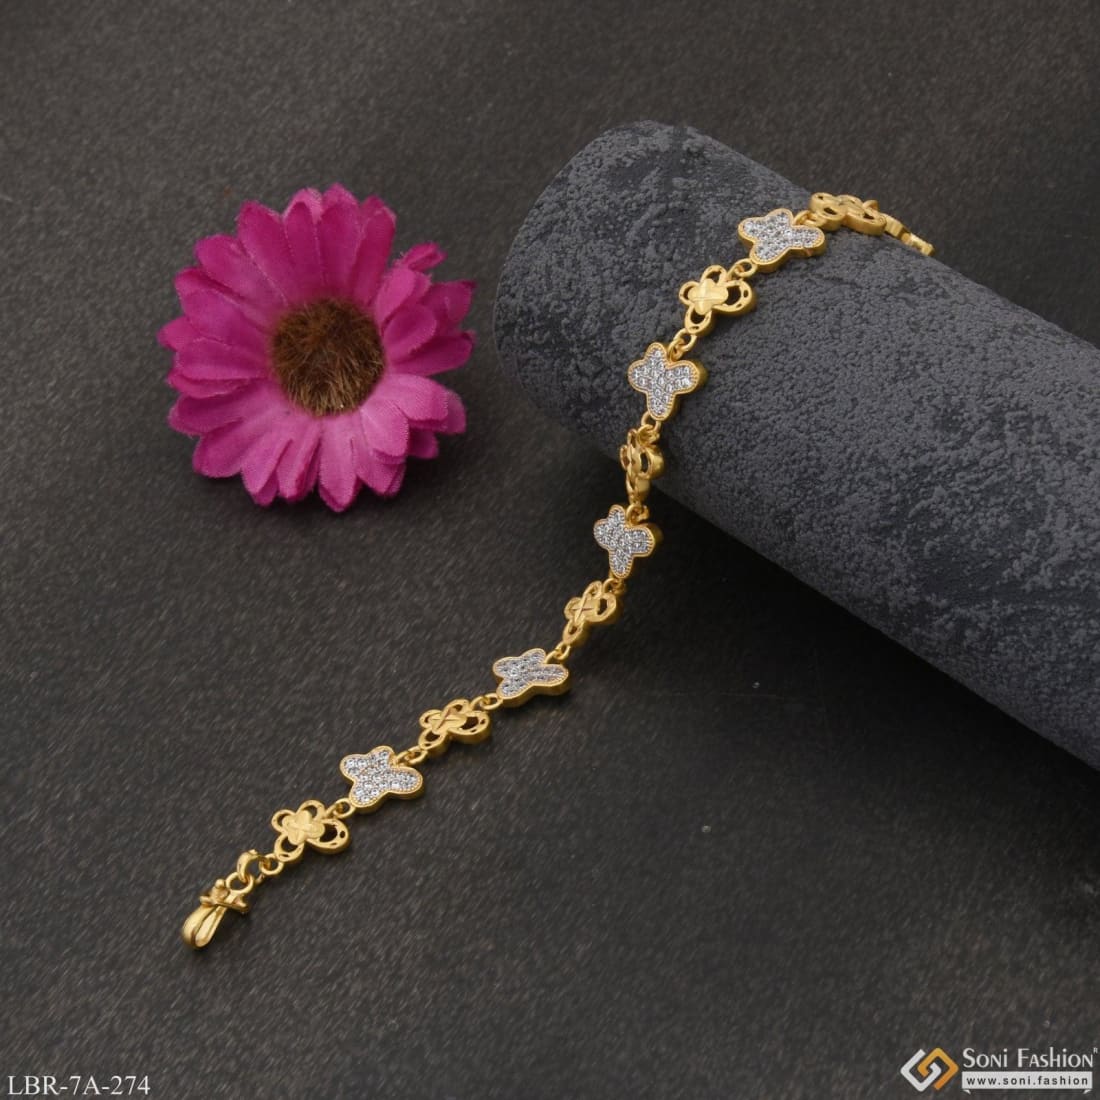 Latest Gold Bracelet Designs//Gold Ladies Bracelet - YouTube